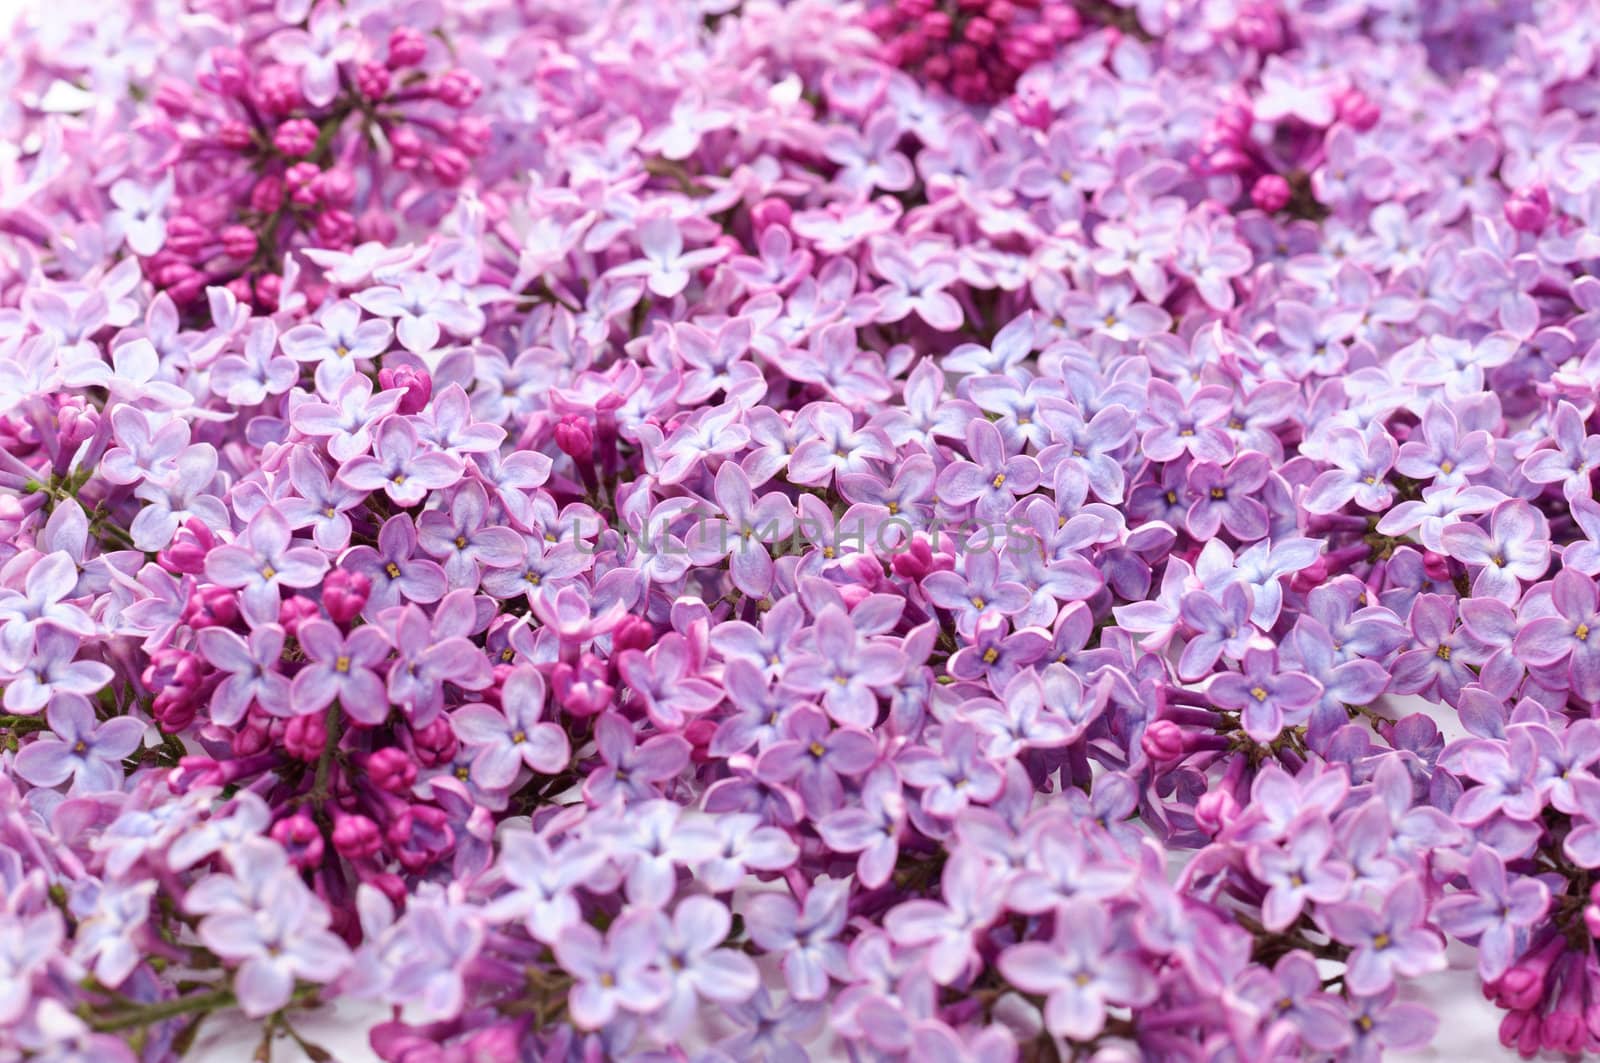 Lilac flower